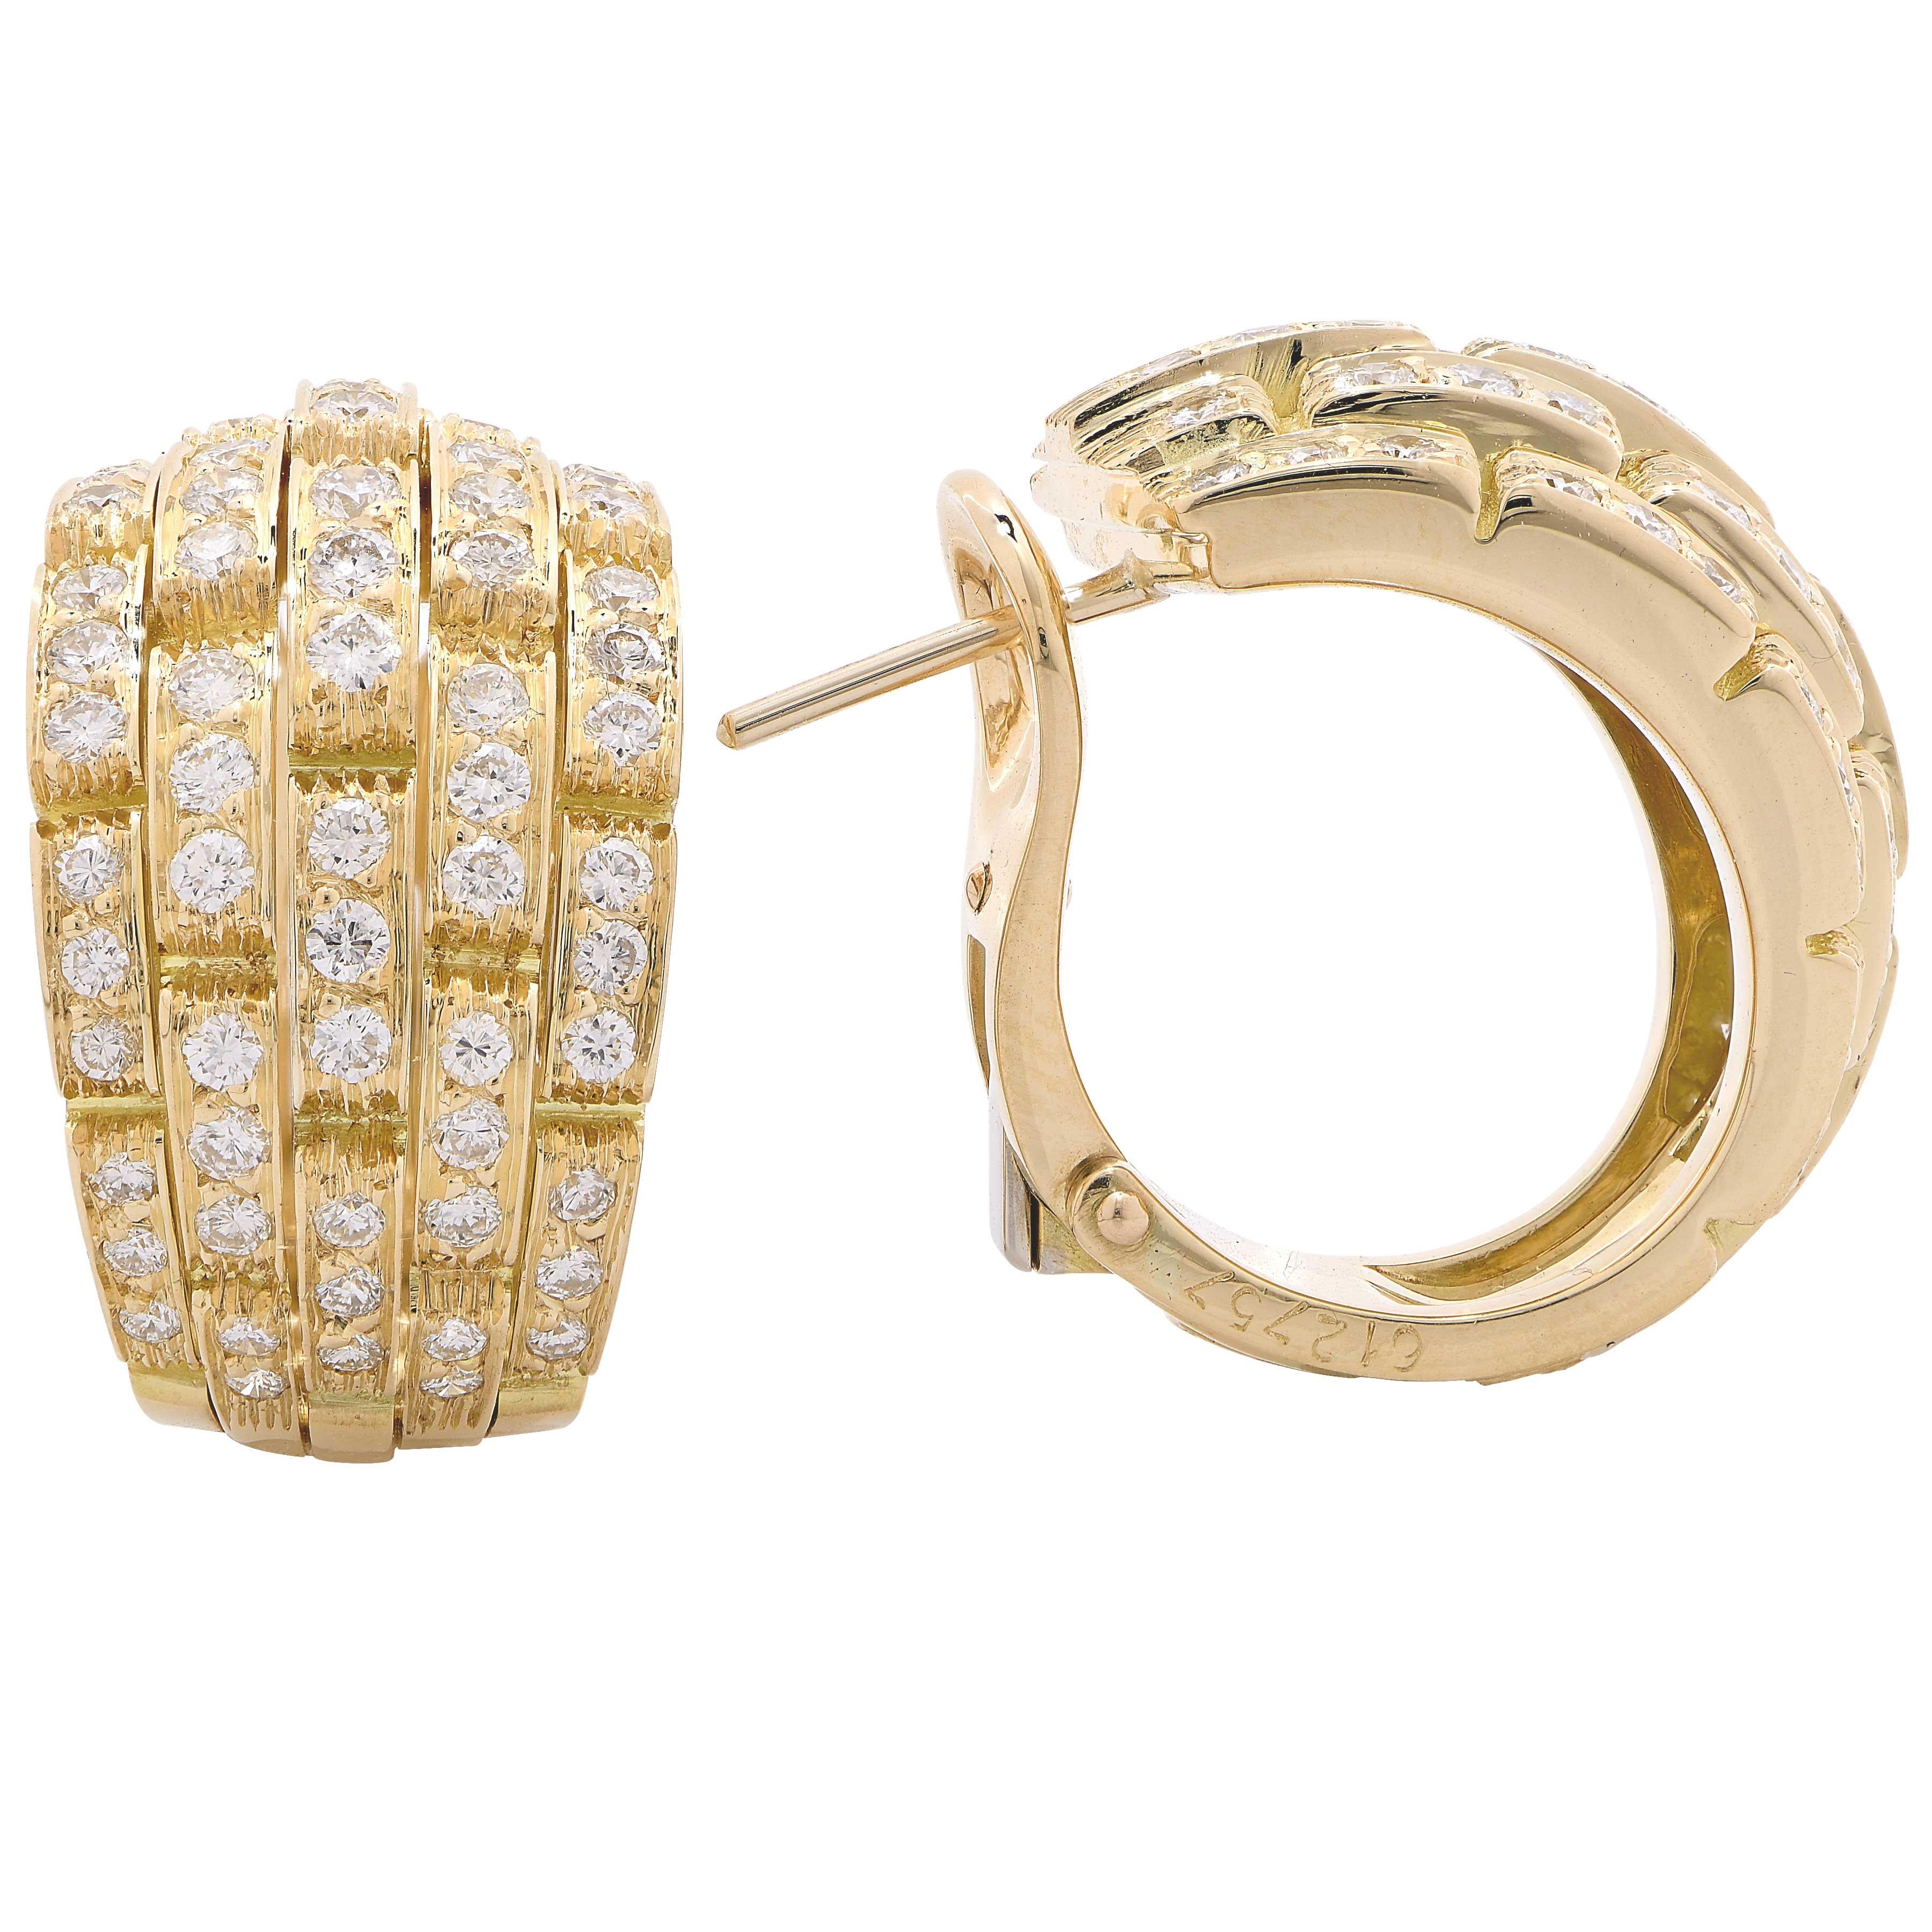 Round Cut Cartier Maillon Panthere Diamond Earrings in 18 Karat Yellow Gold, circa 1980